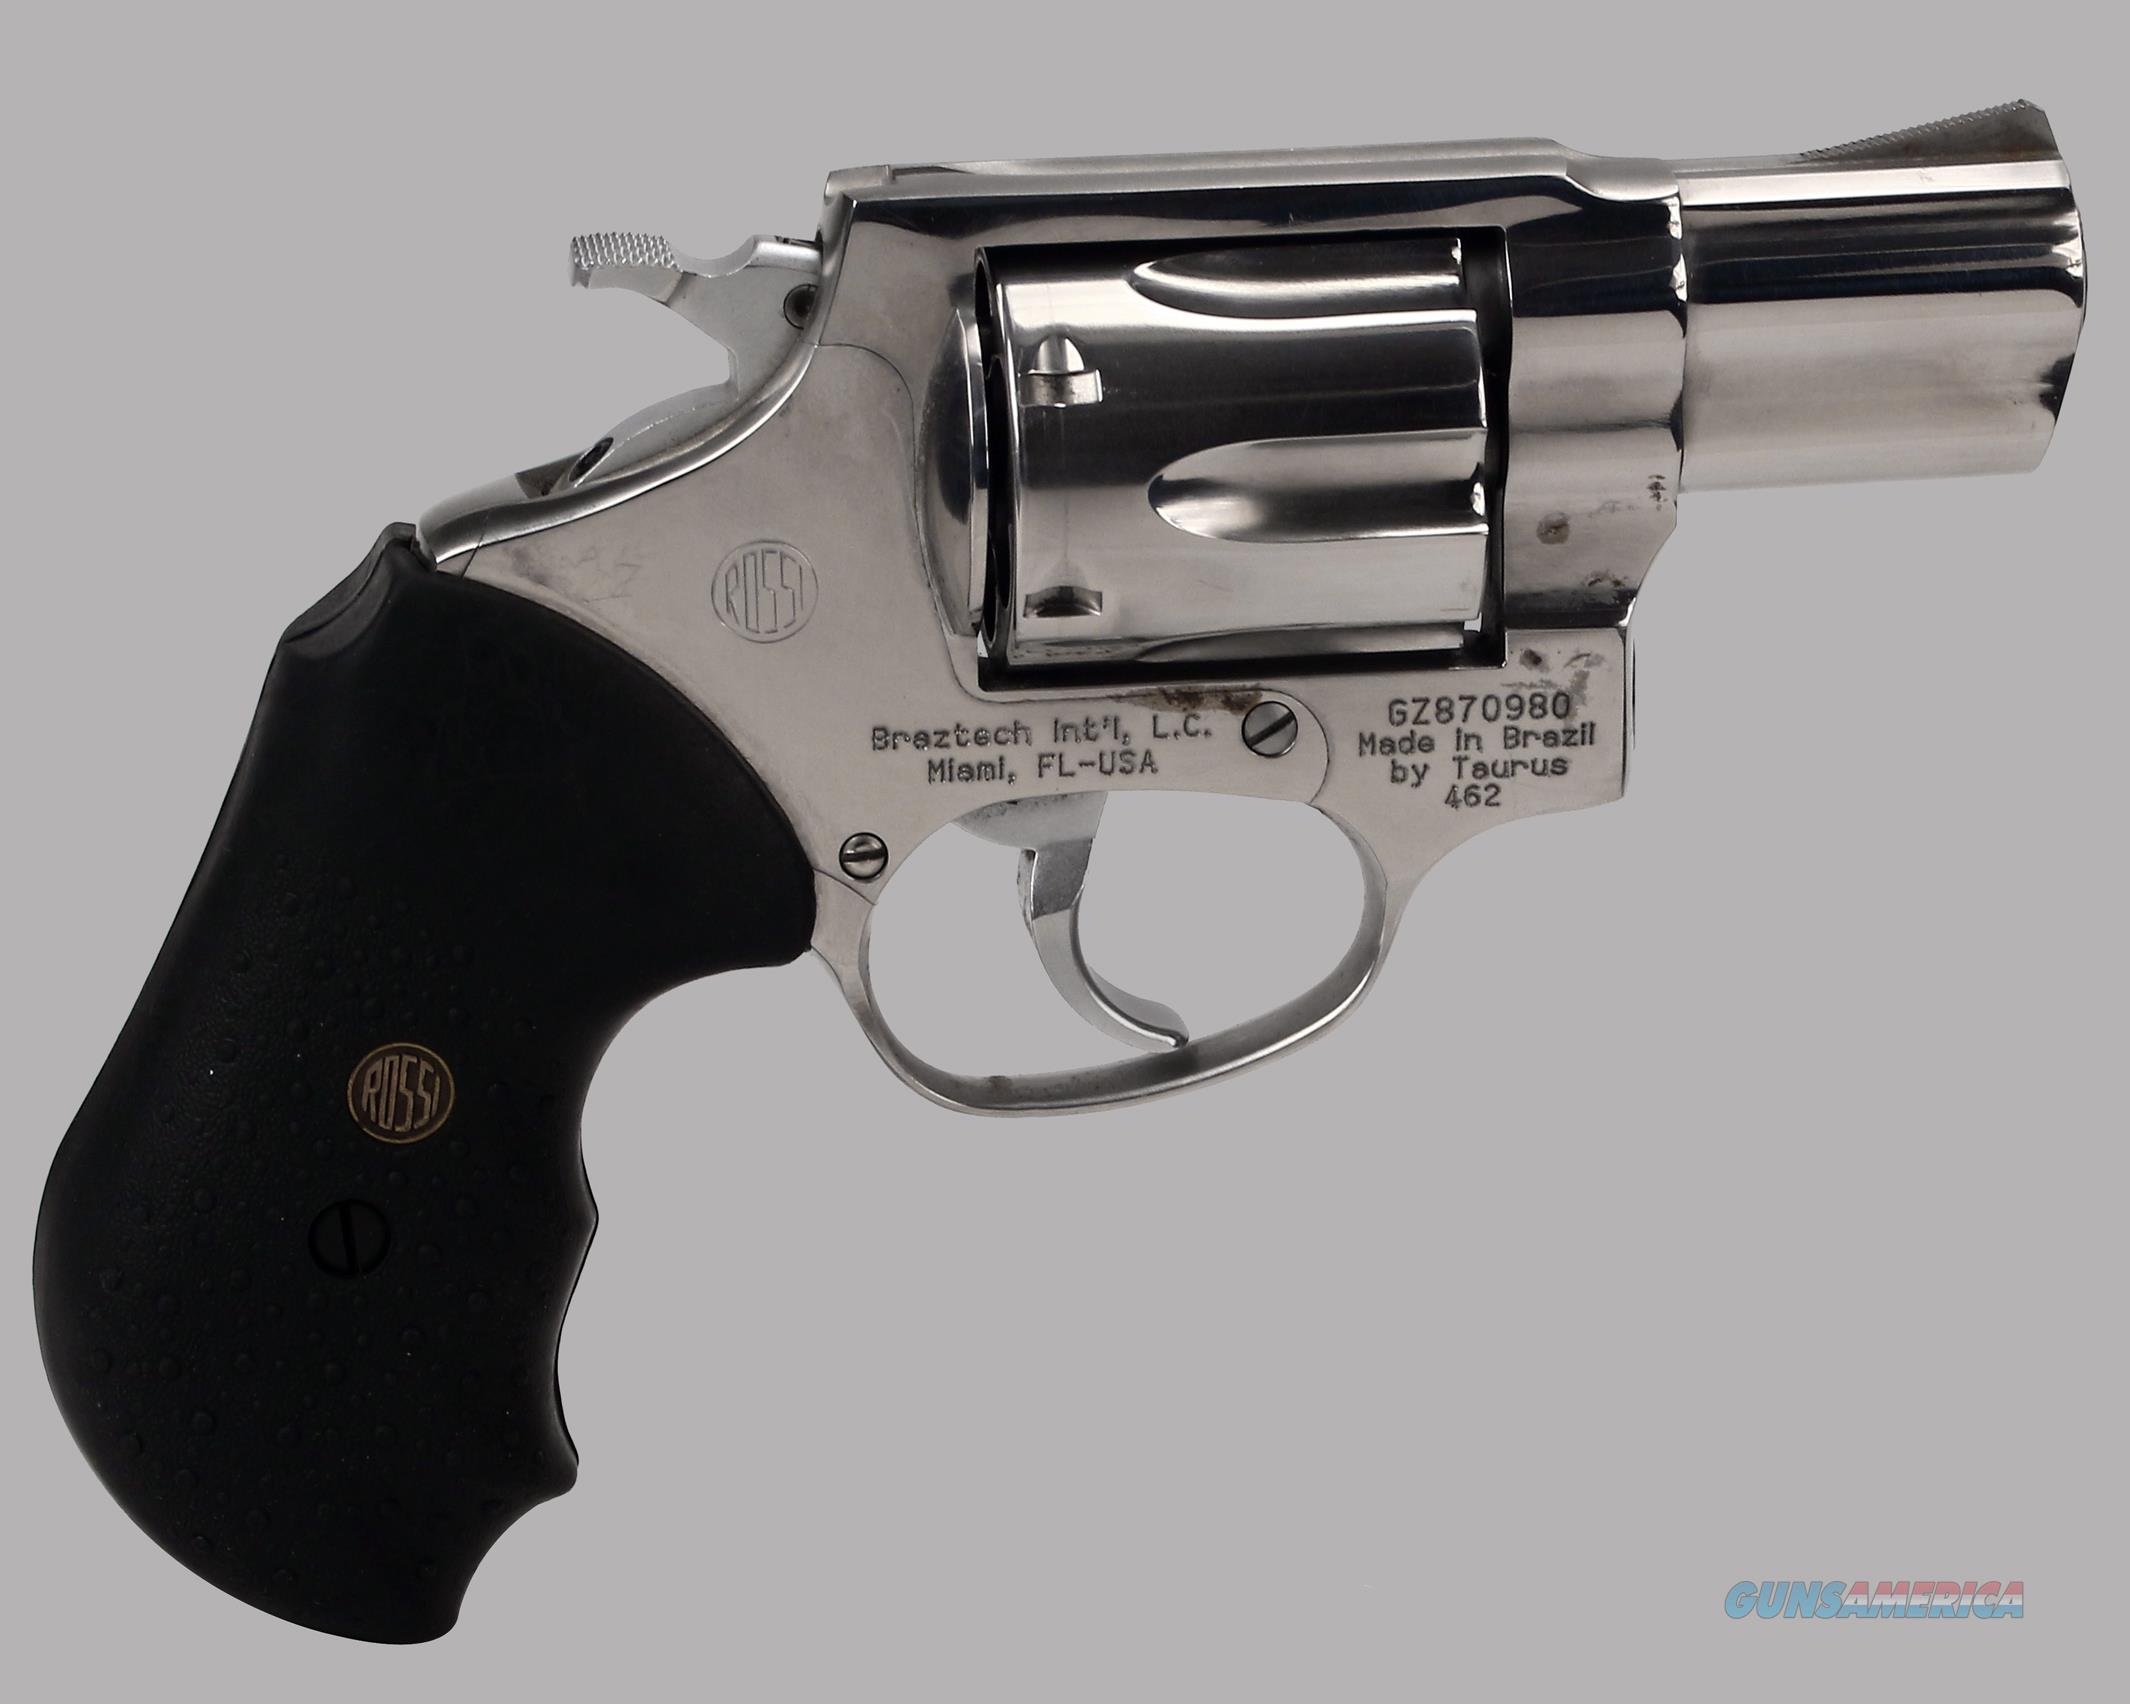 verwijzen gisteren Overeenkomstig Rossi (Braztech) 375 Magnum Model 462 Revolver for sale